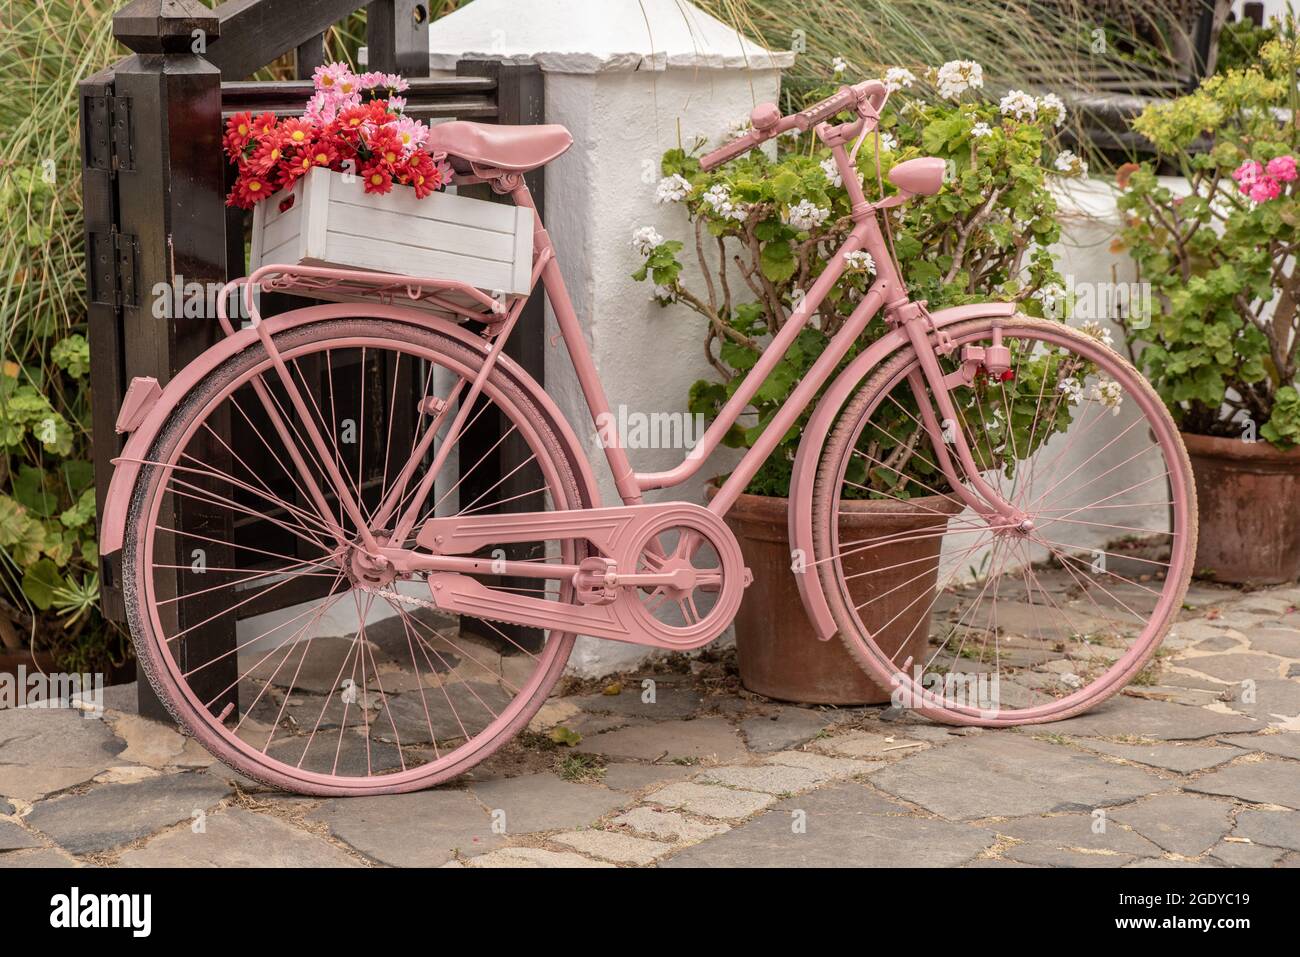 Rosa fahrrad -Fotos und -Bildmaterial in hoher Auflösung – Alamy